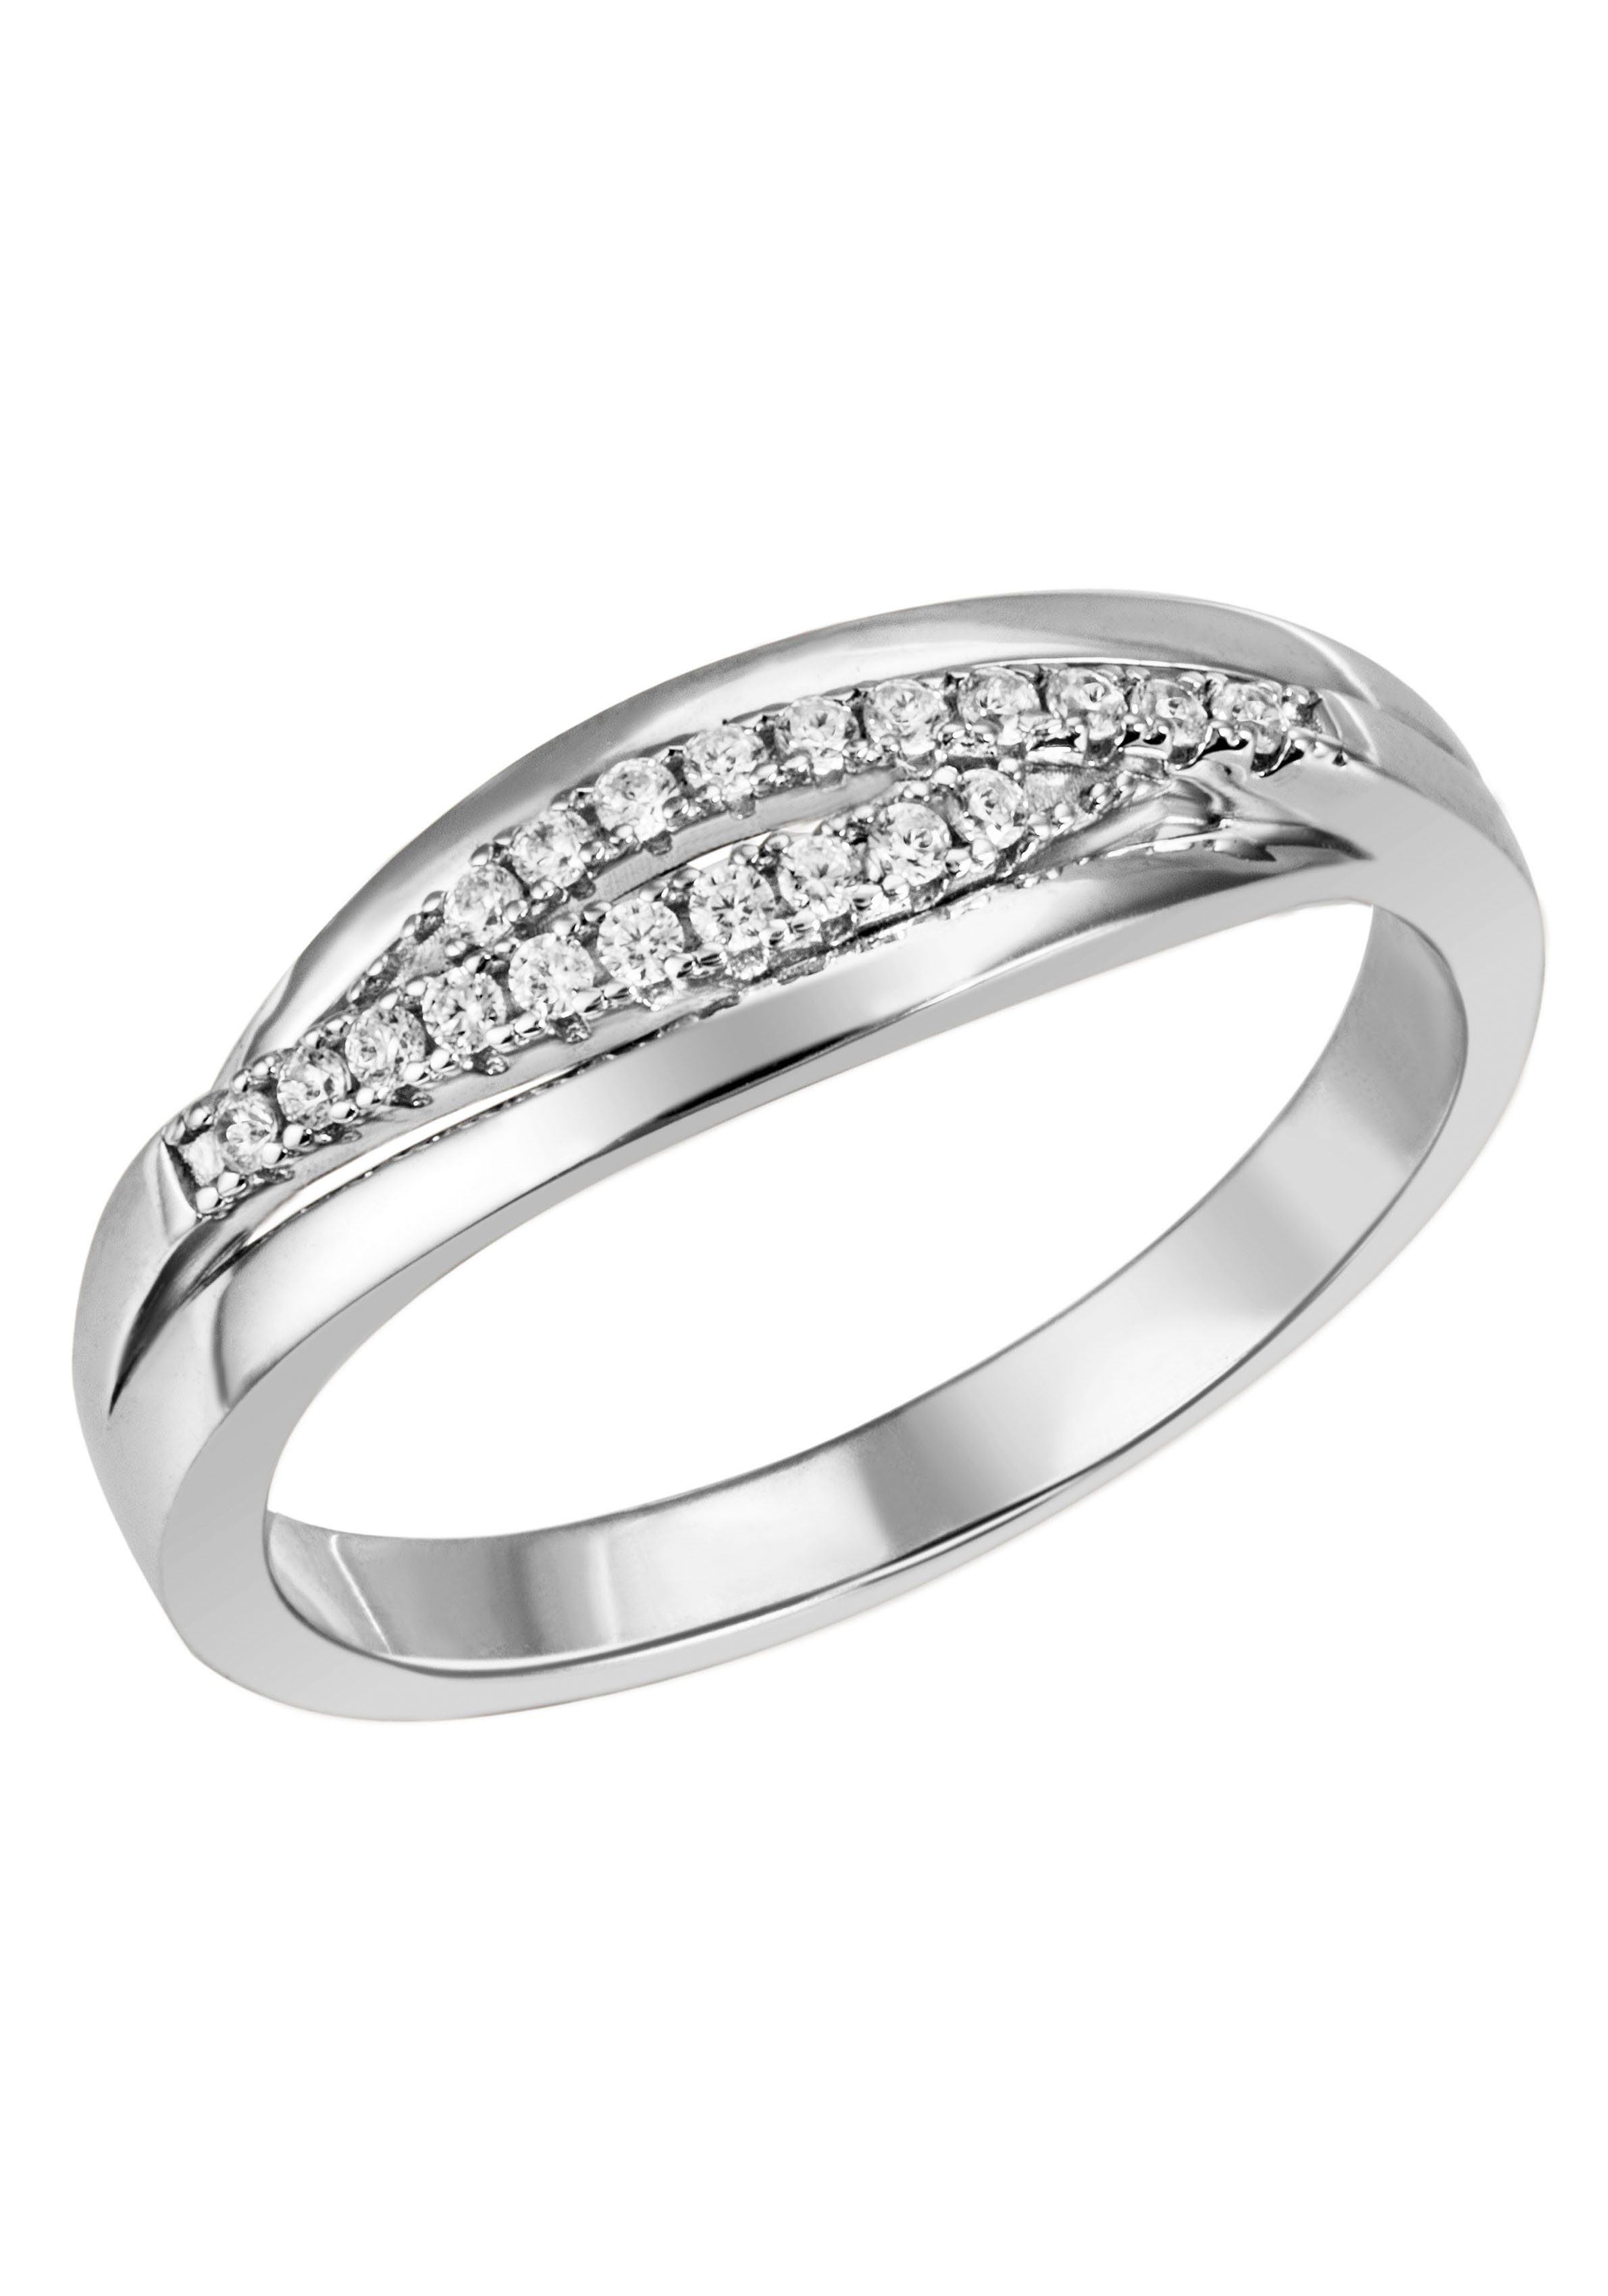 Firetti Fingerring Schmuck Geschenk Silber 925 Silberring Ring glitzernd, mit Zirkonia (synth)